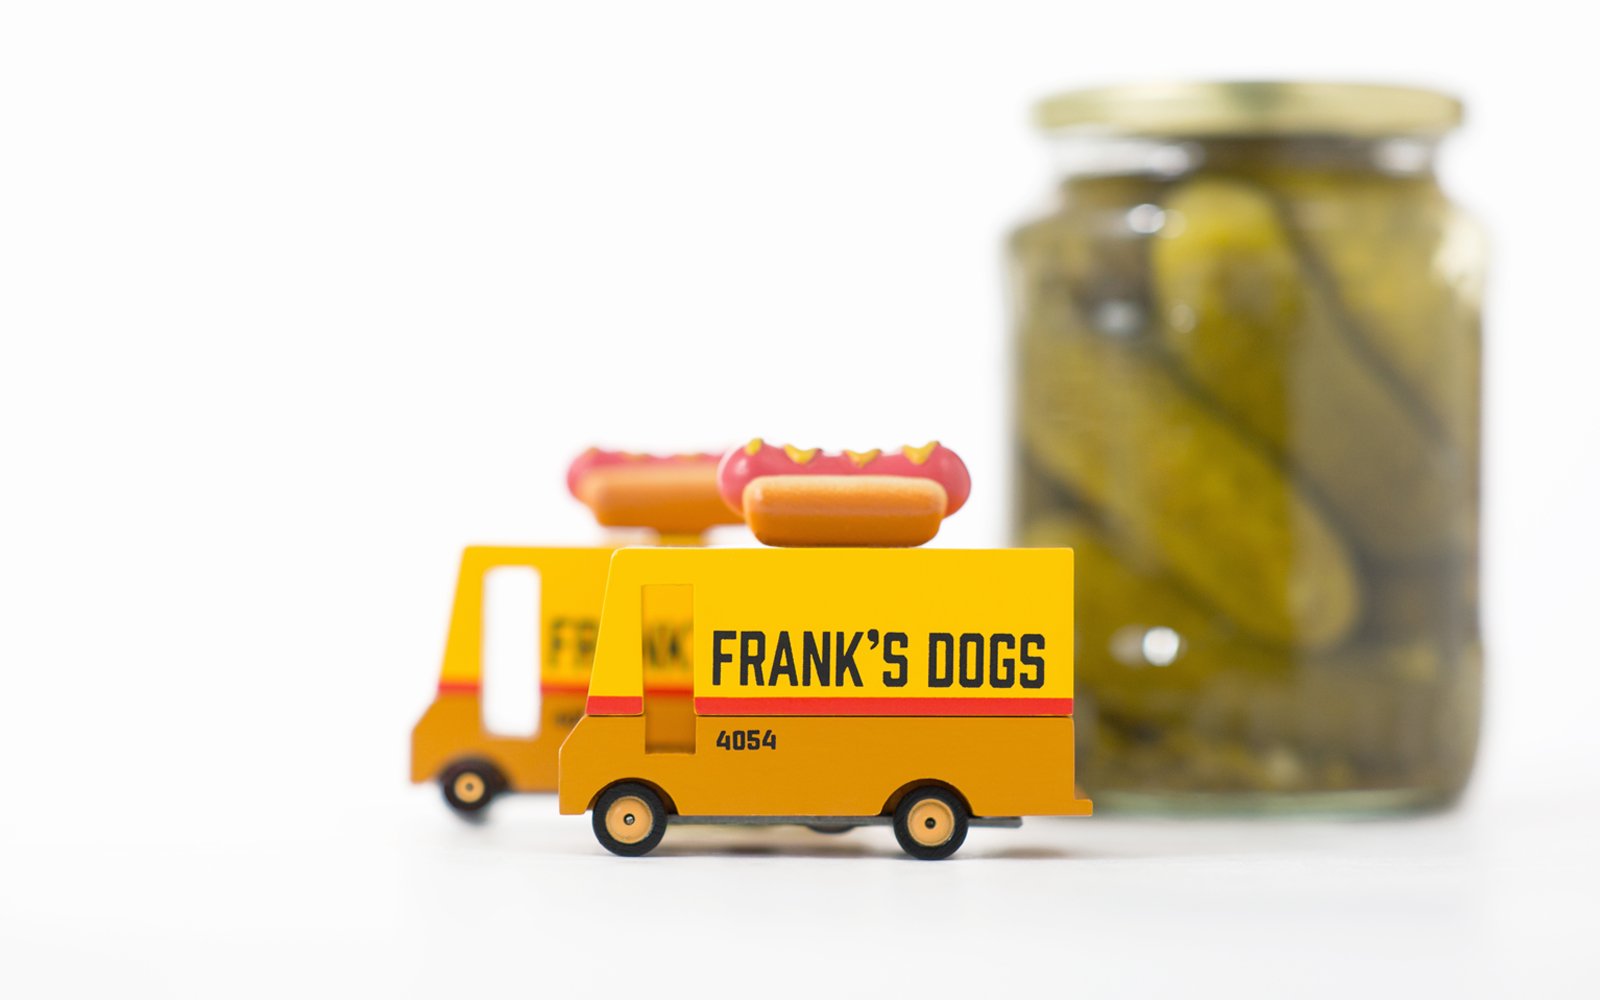 Candyvans Hot Dog Van